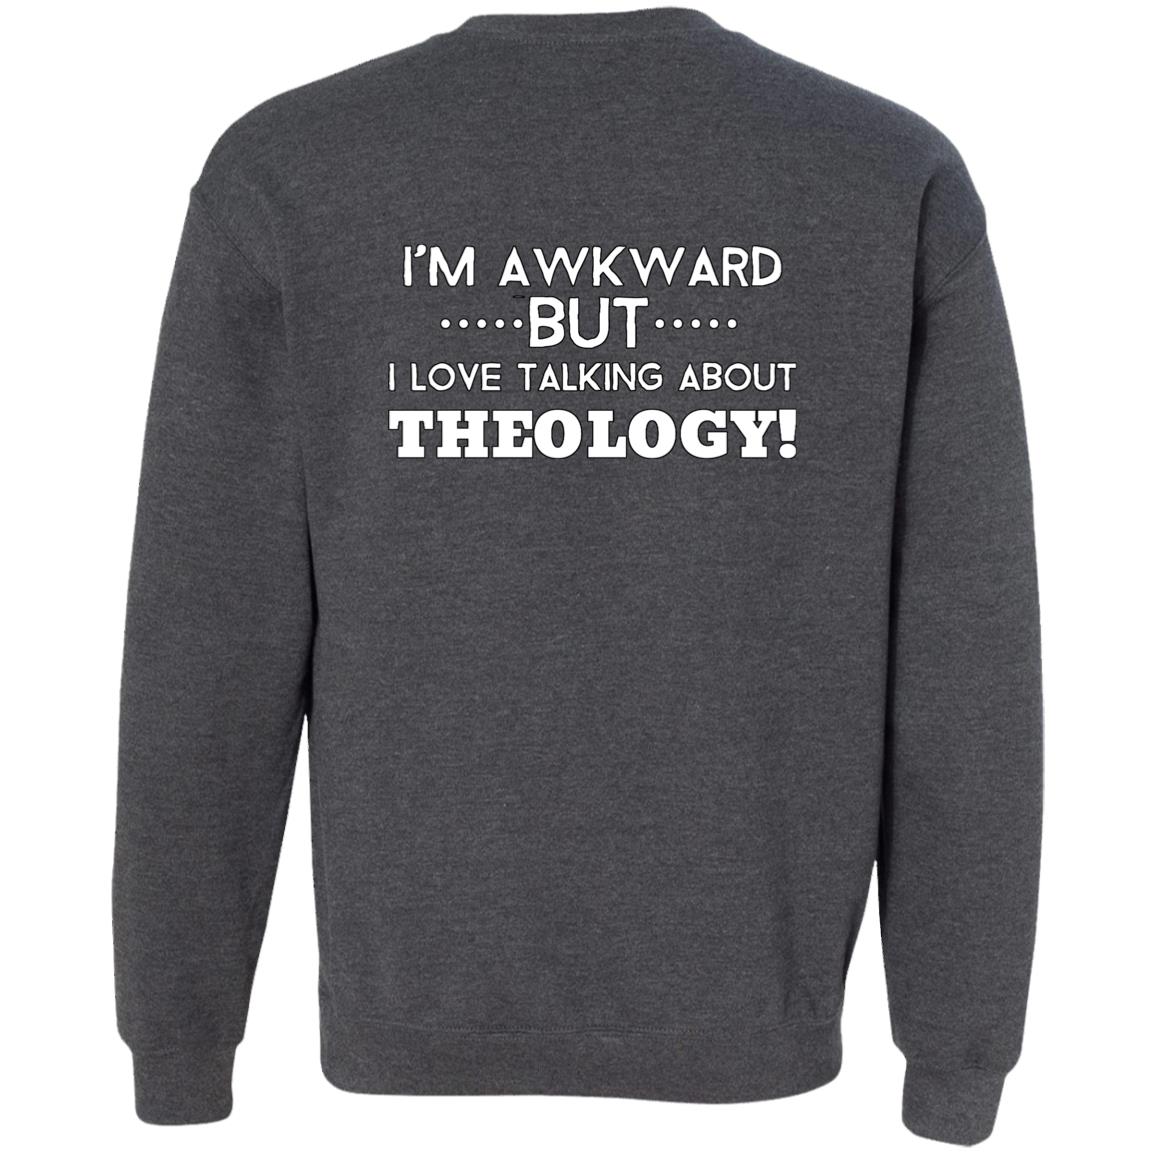 Awkward but Love Theology (Unisex Sweatshirt)